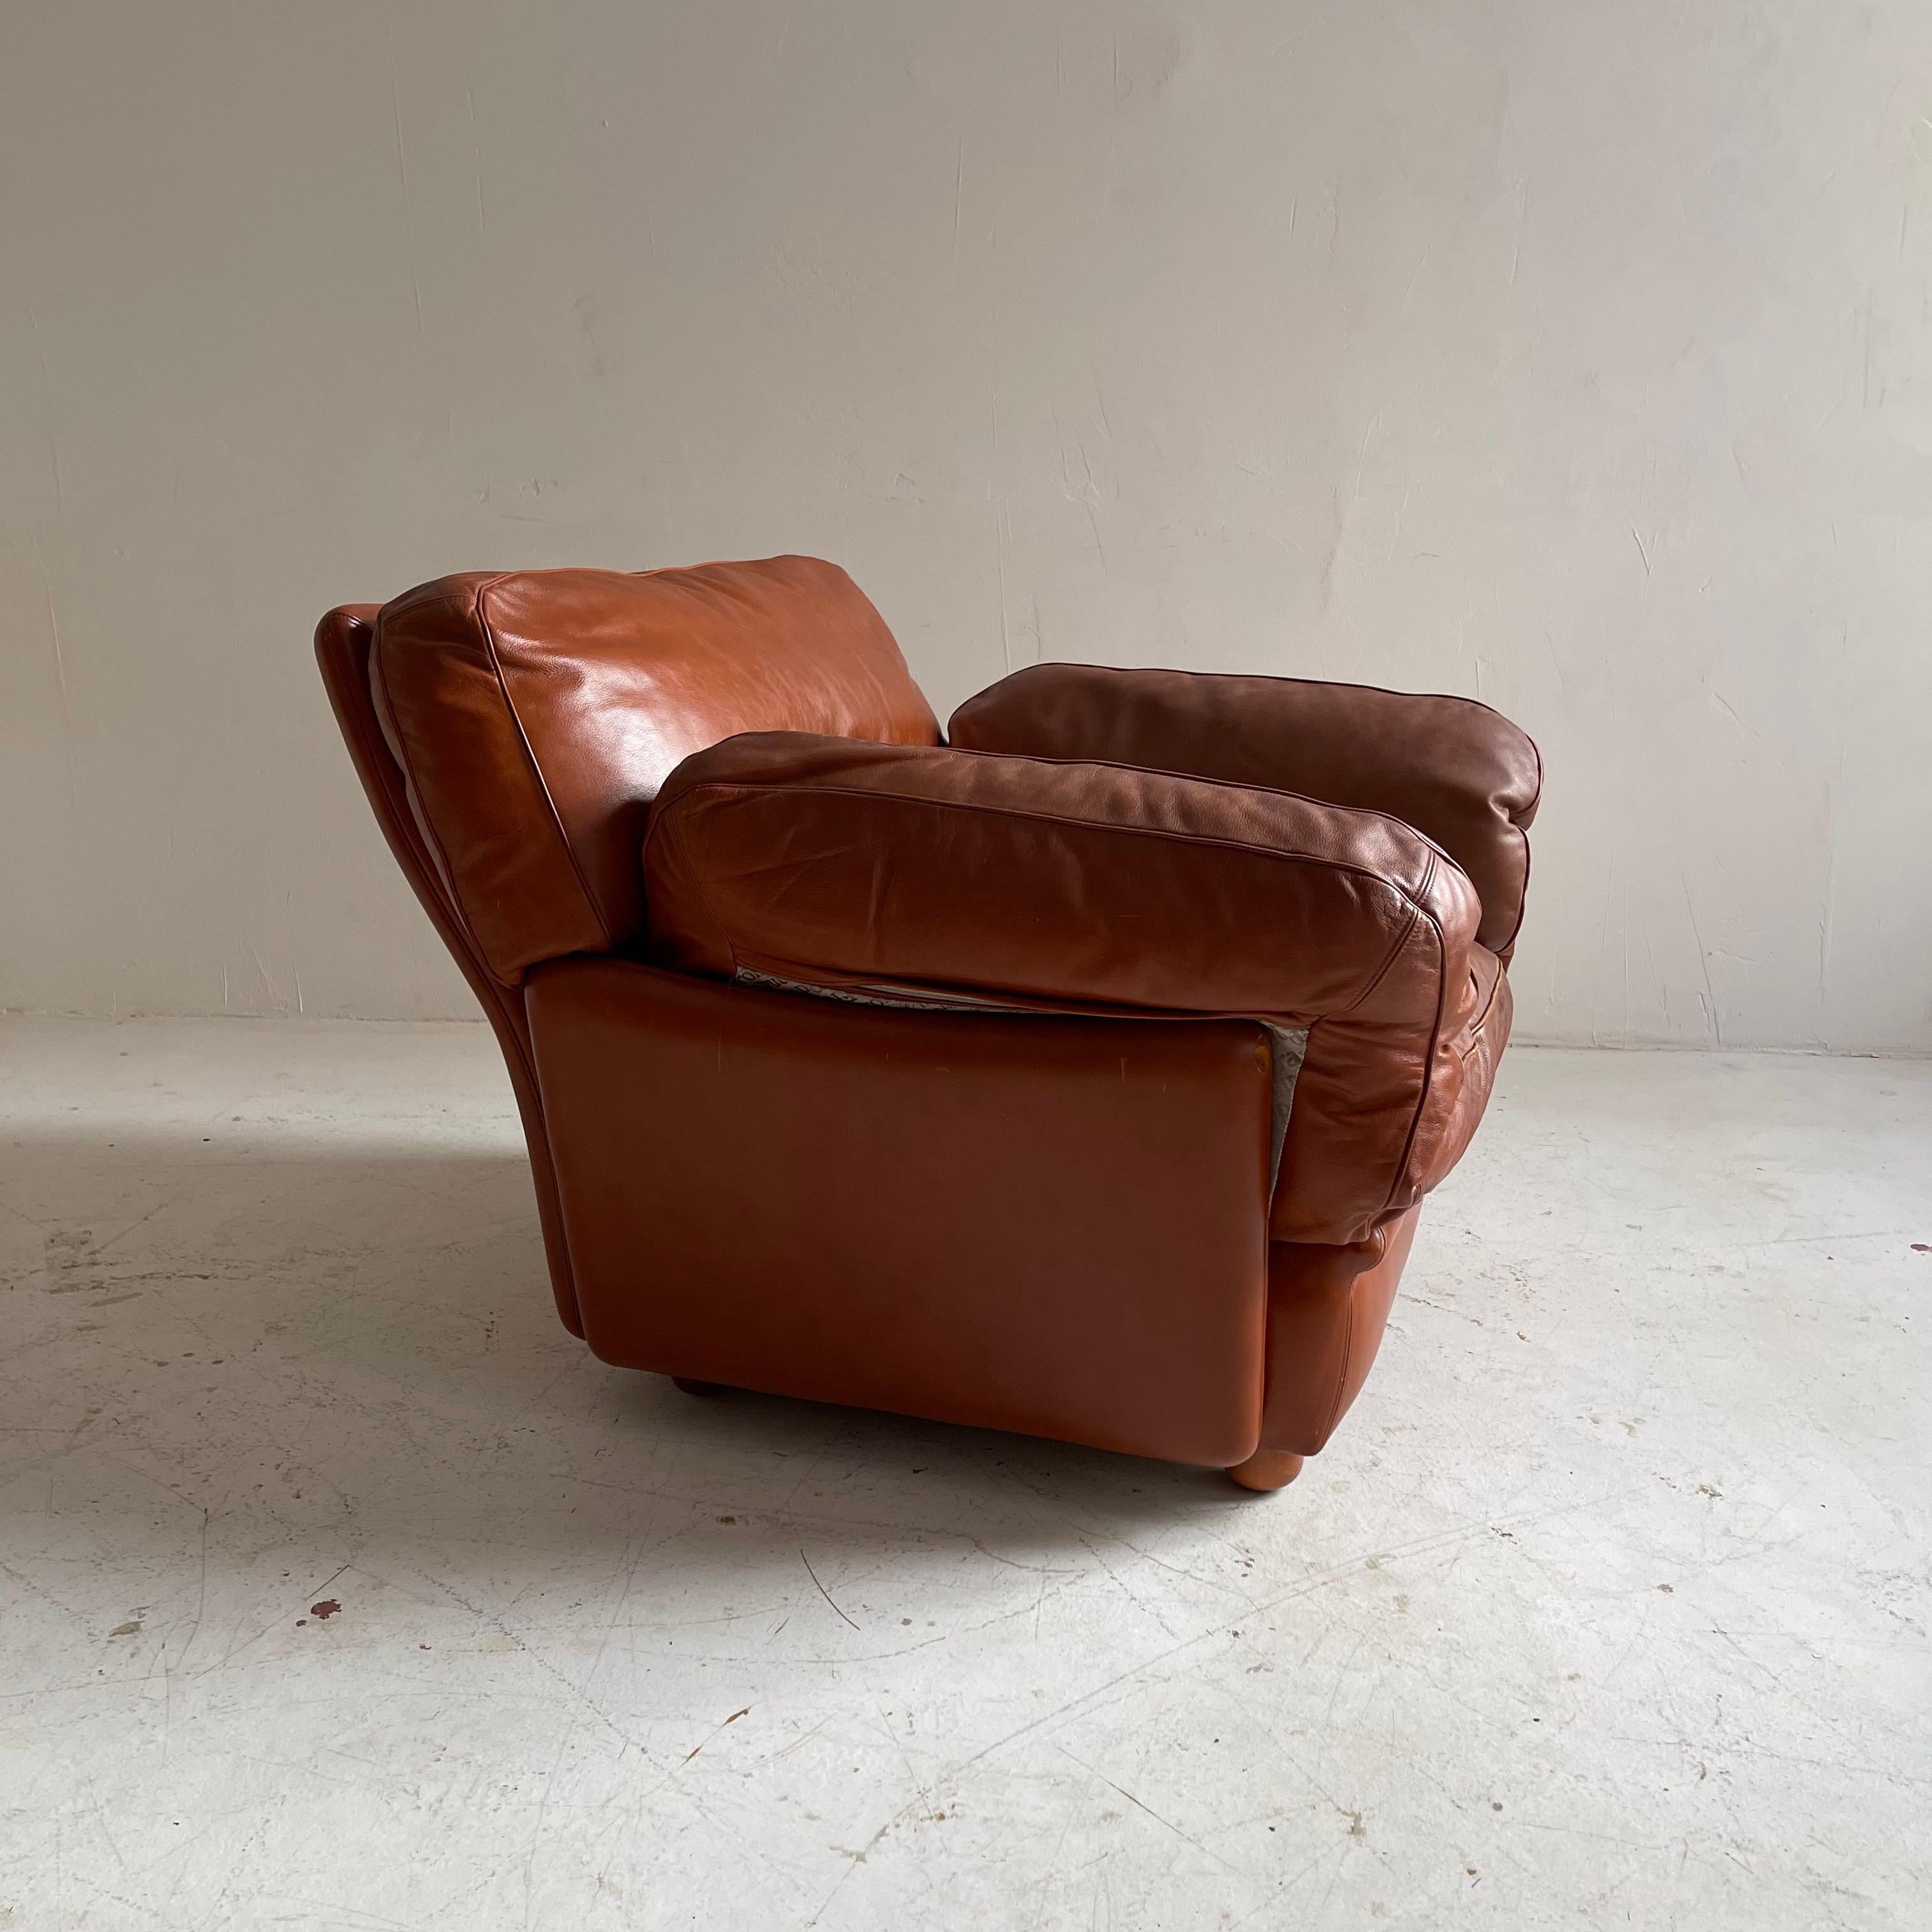 Tito Agnoli Cognac Leather Sofa Suite Model 'Poppy' Poltrona Frau, Italy 1970s For Sale 3